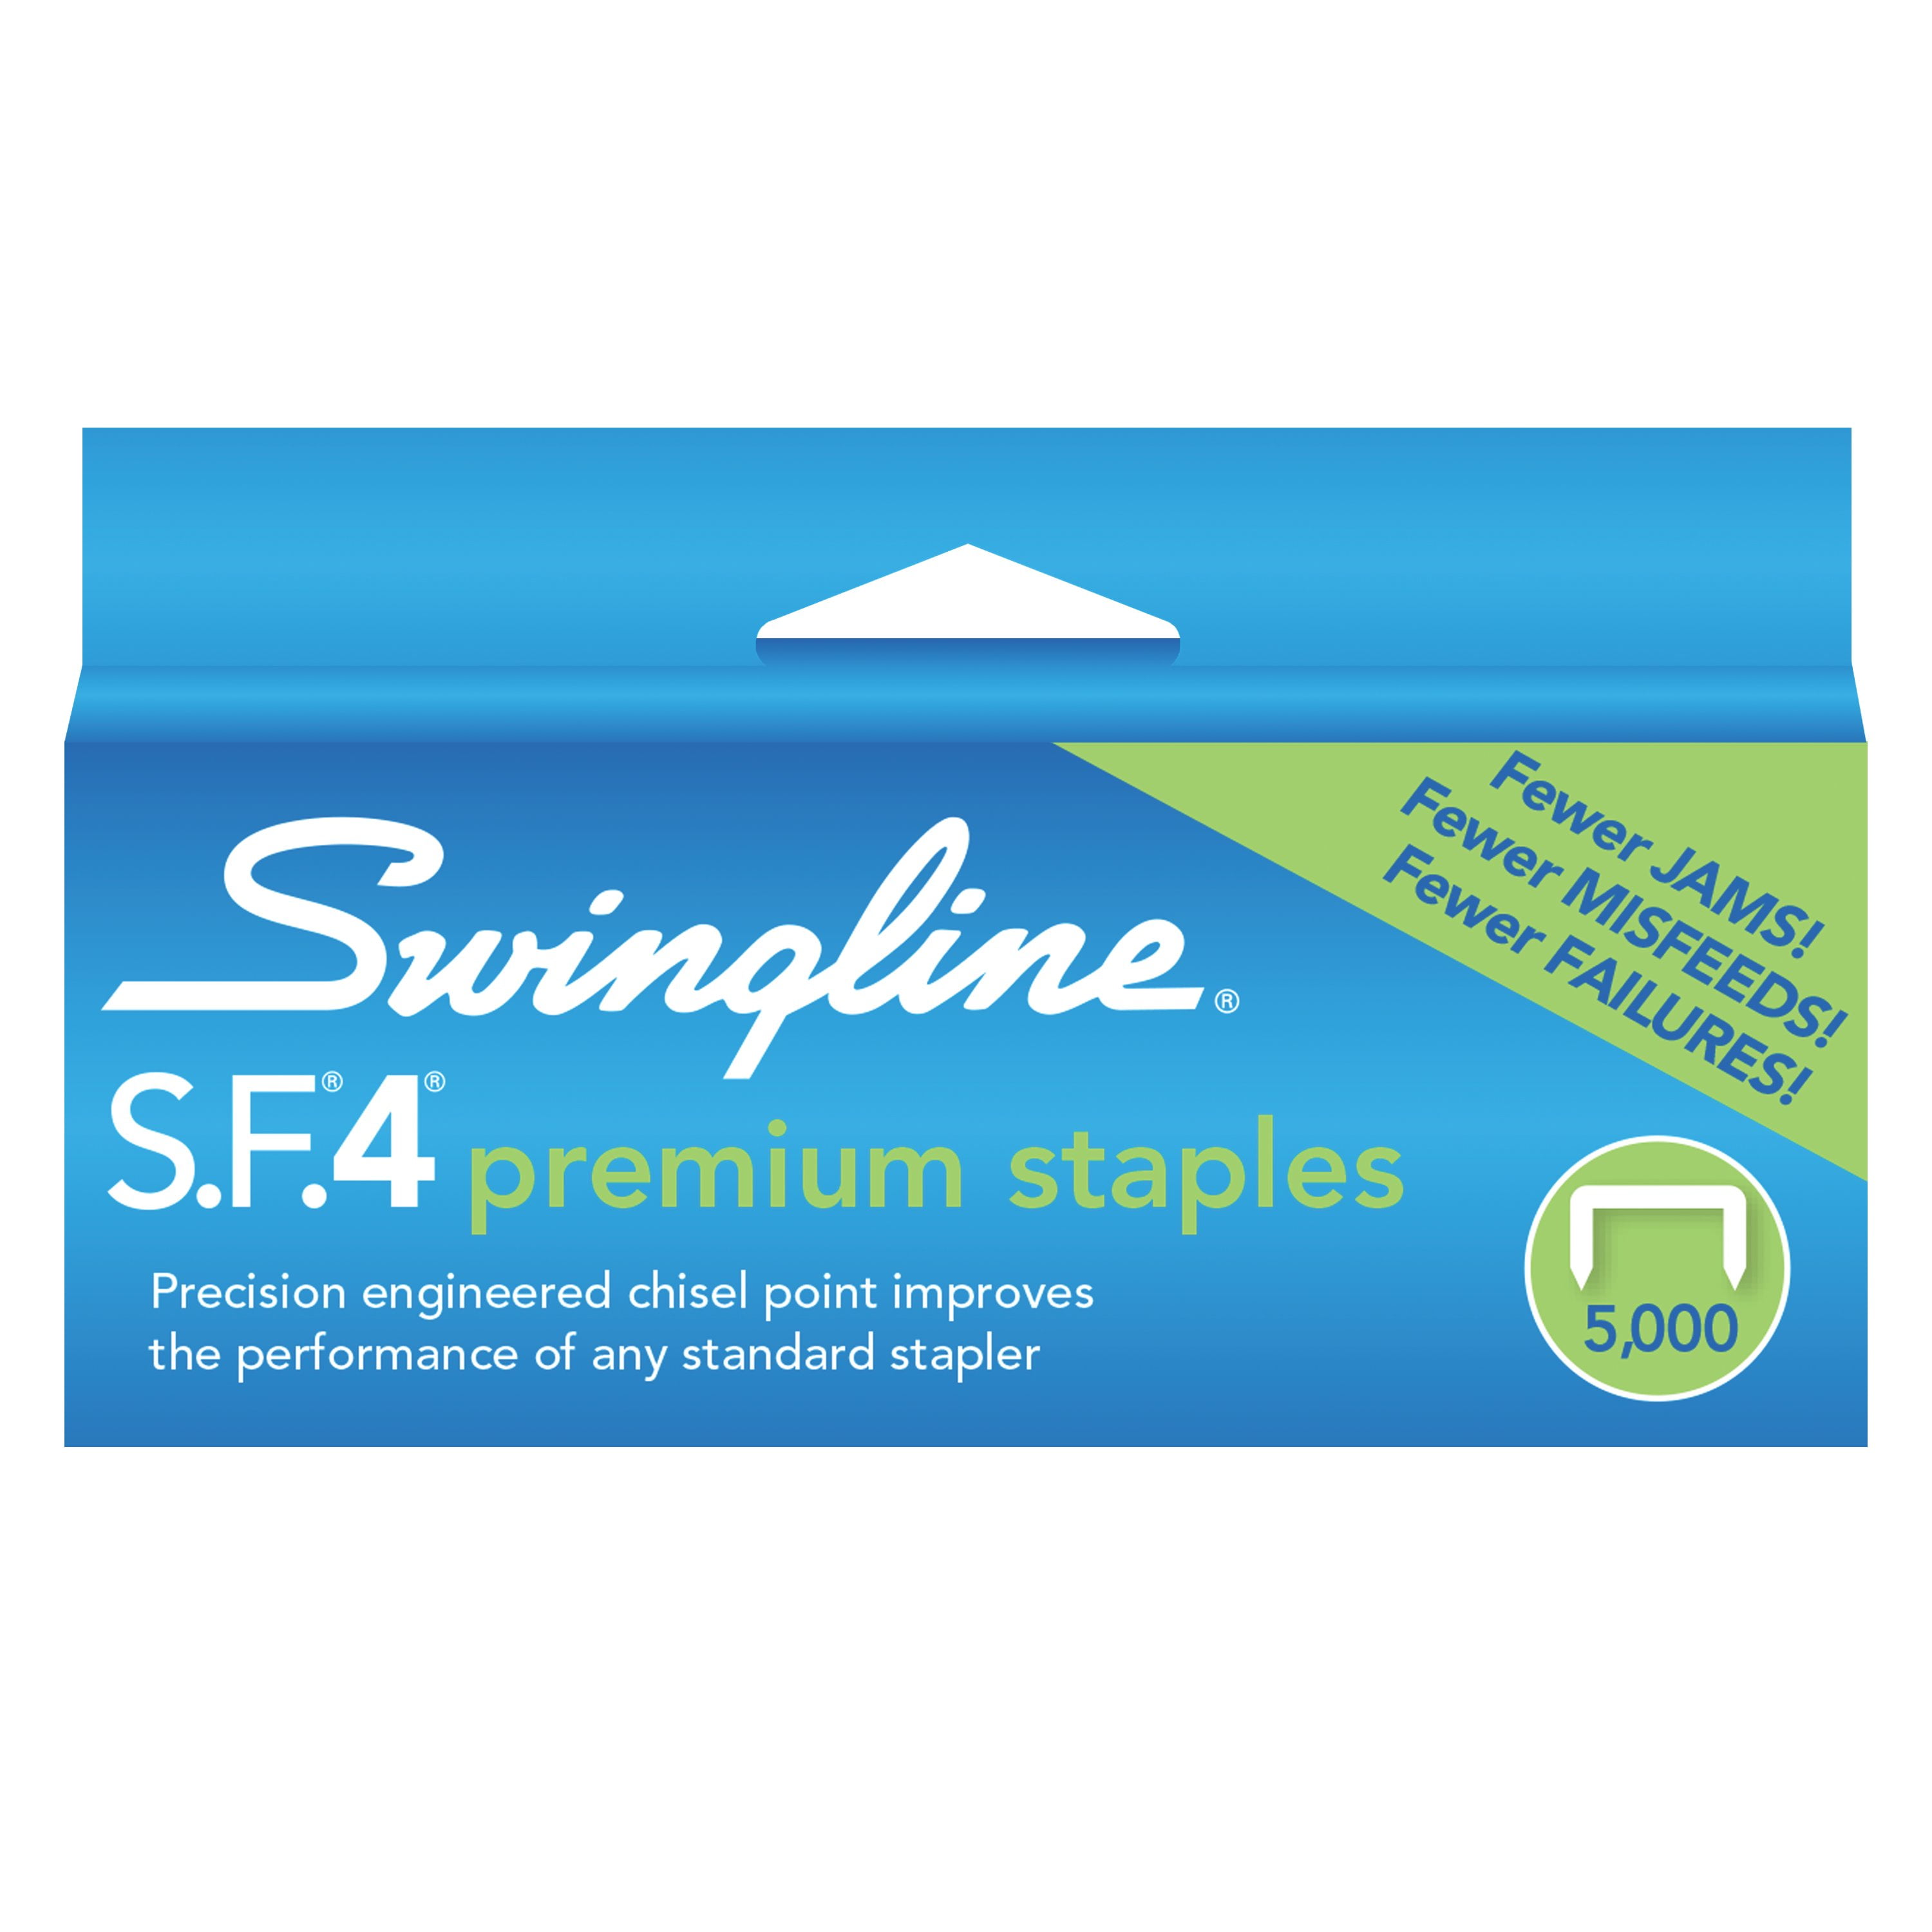 where to buy swingline staples